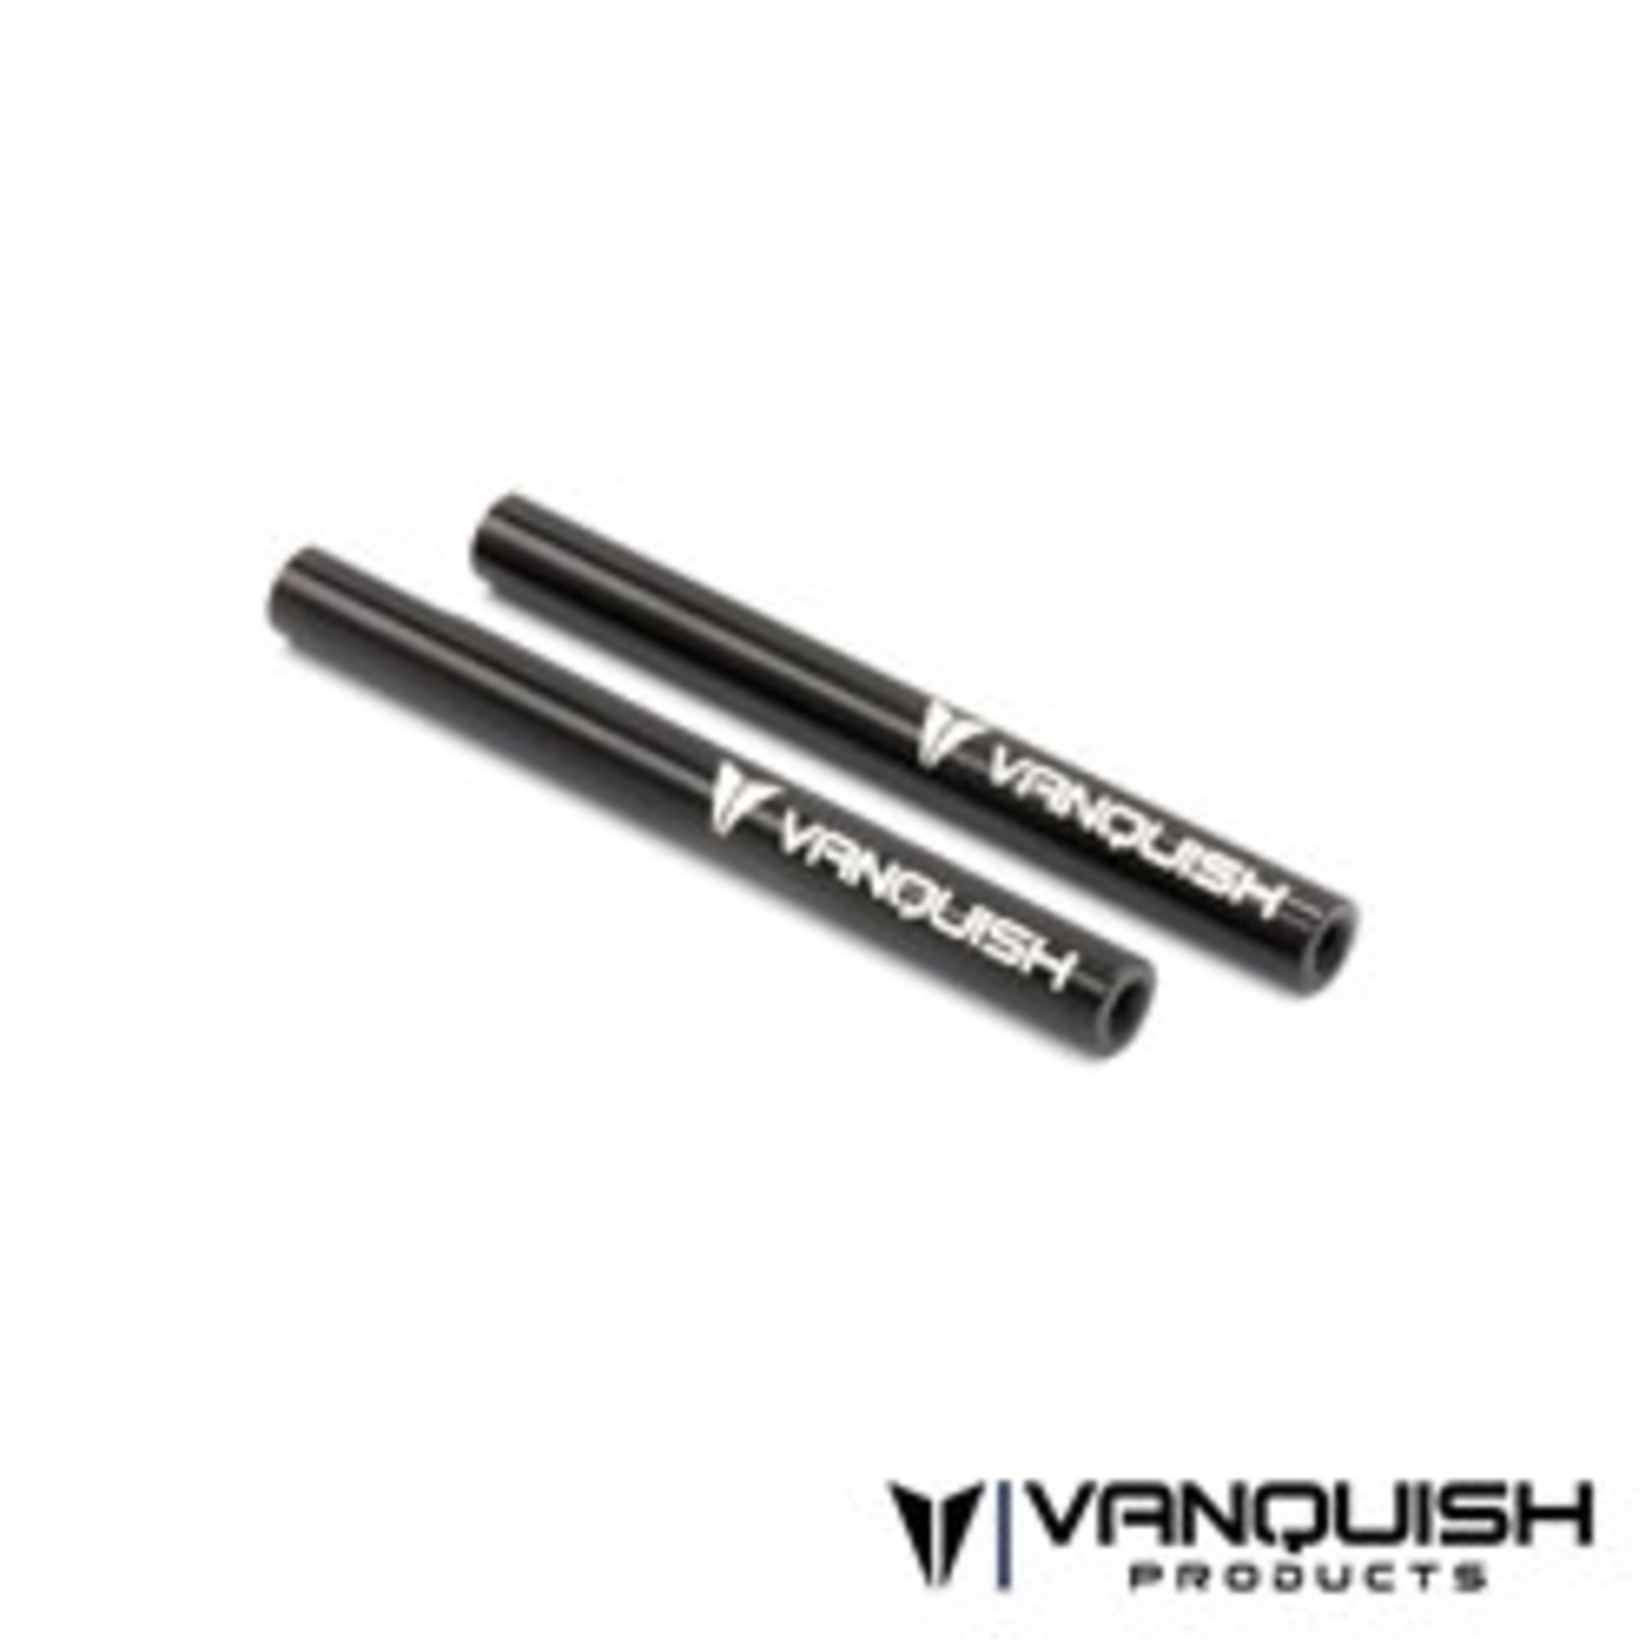 Vanquish Products Vanquish Products VFD Aluminum Standoffs (Black) (2) #VPS10151